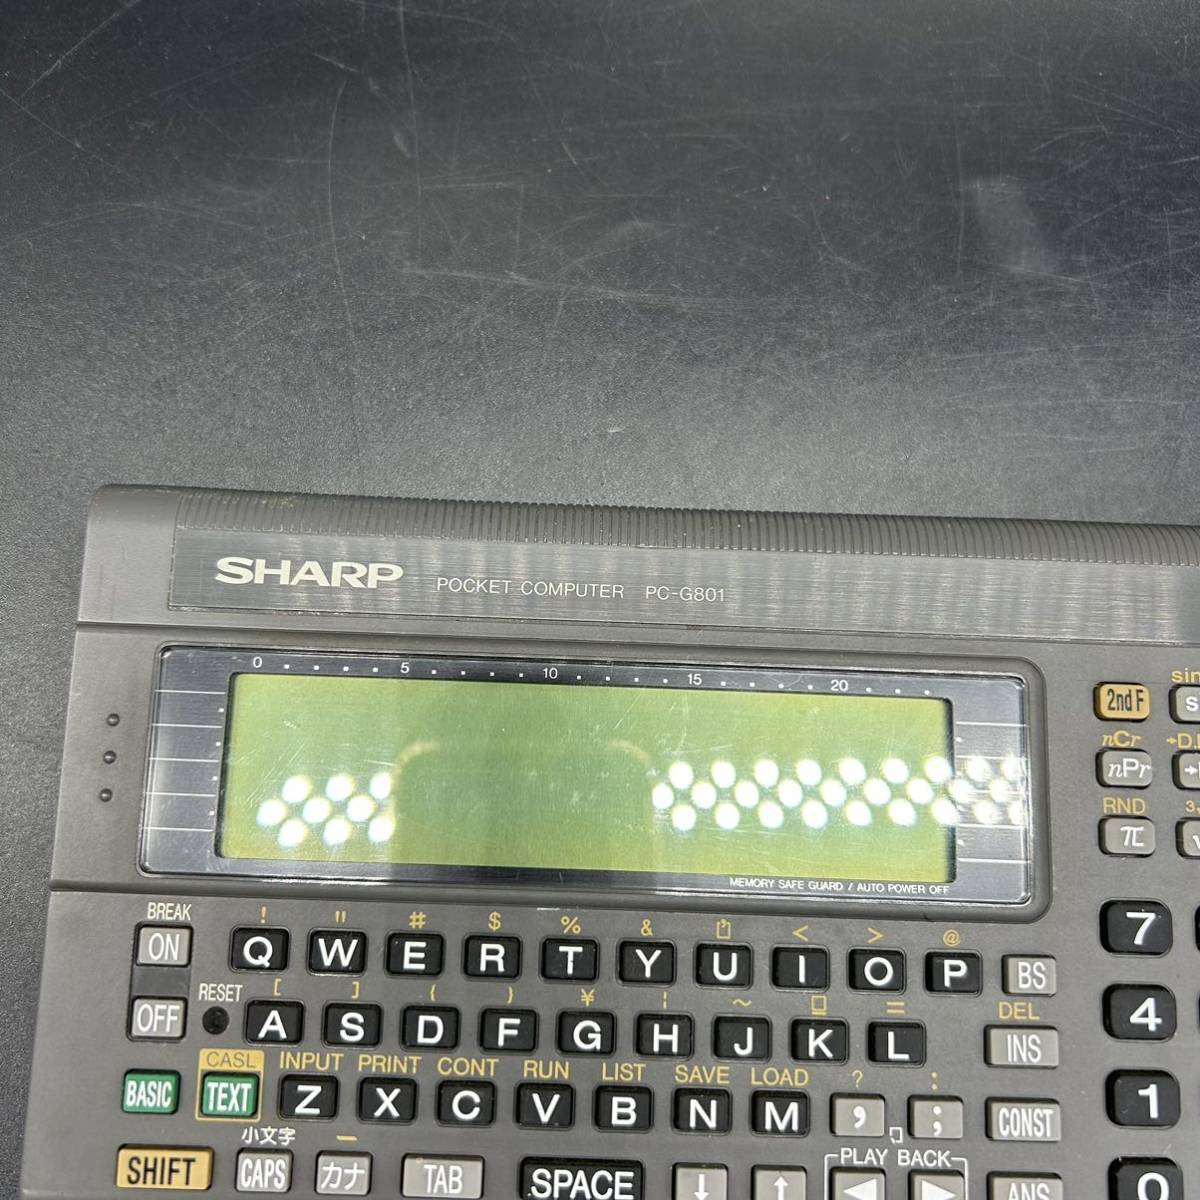 SHARP sharp POCKET COMPUTER карманный компьютер -PC-G801 утиль L14